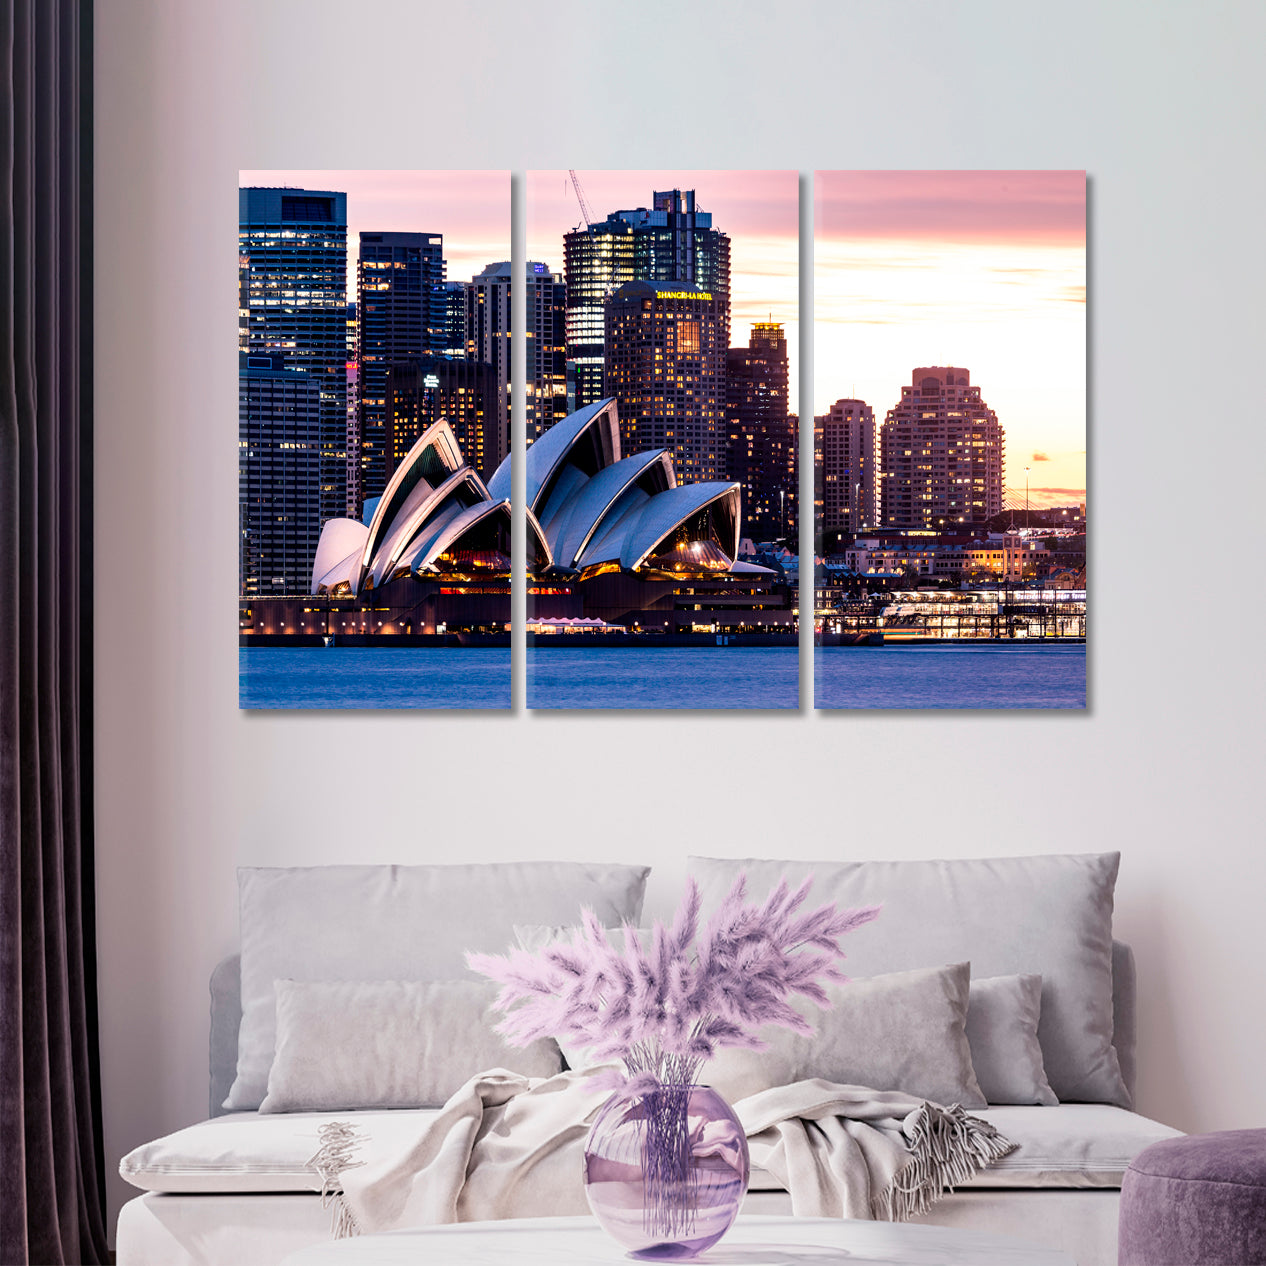 Australia Landmarks Sydney Opera House Skyline Cities Wall Art Artesty 3 panels 36" x 24" 